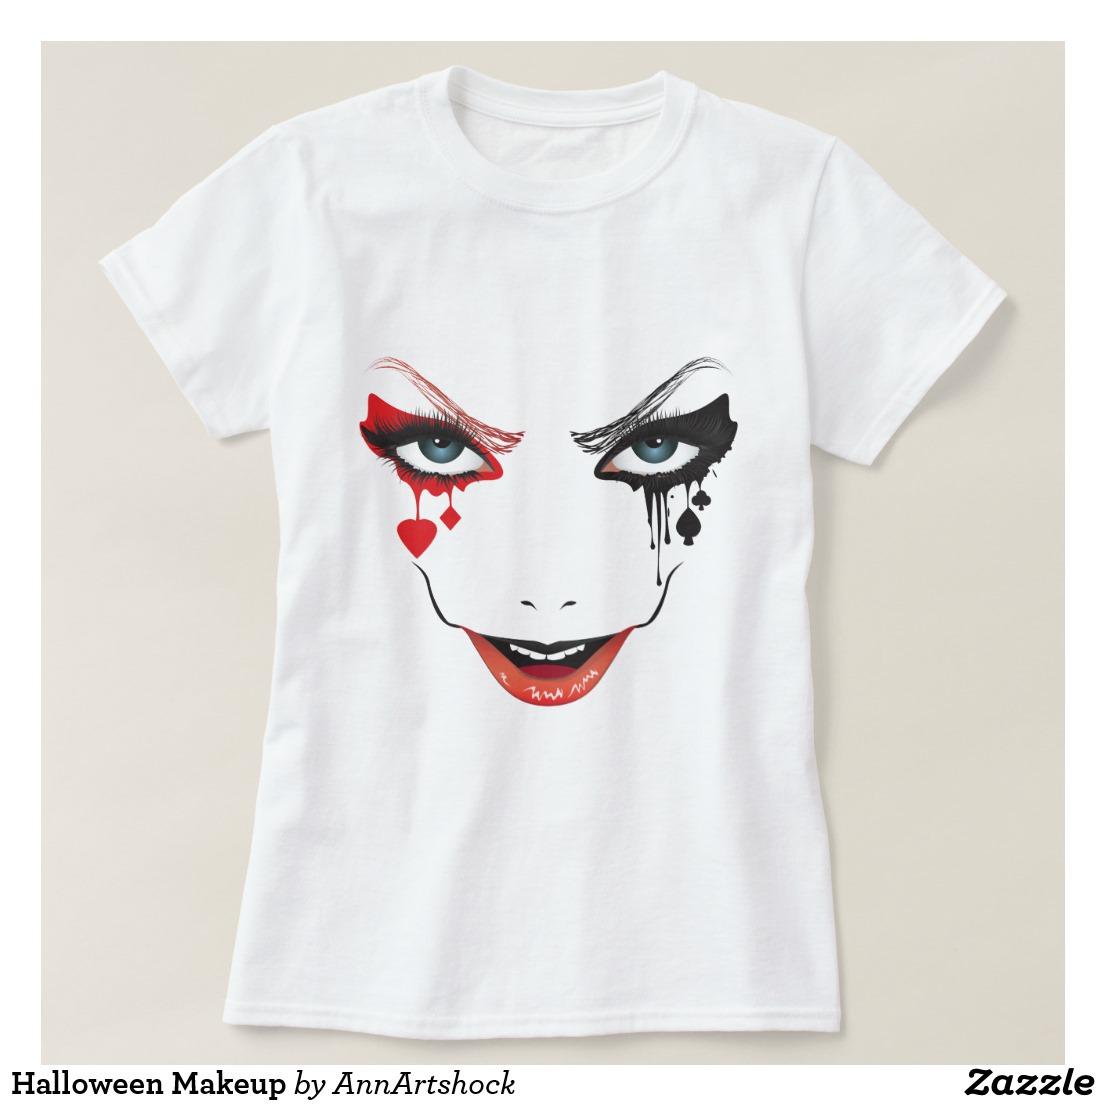 Make Up Halloween Carnival clown spooky creepy mask gothic idea horror